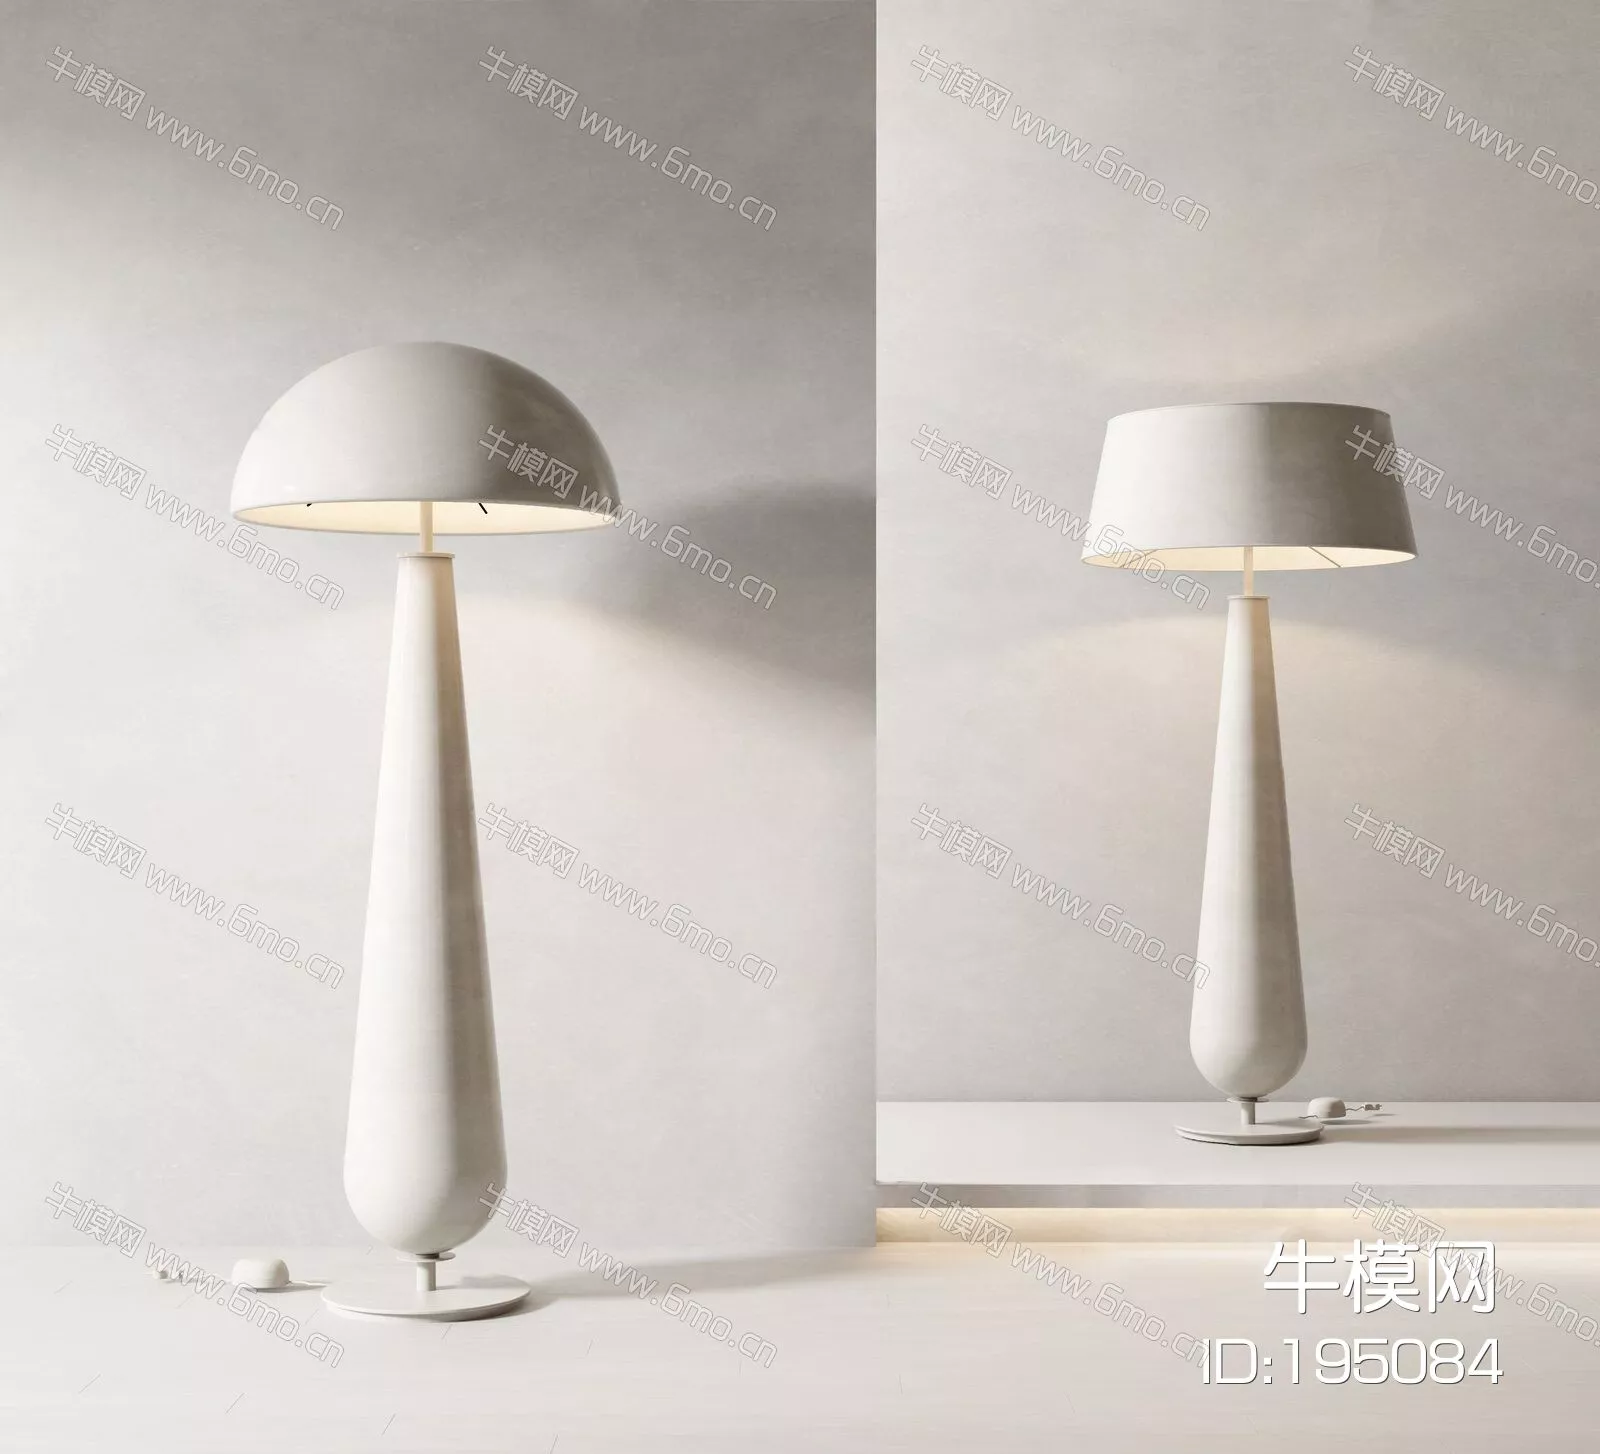 MODERN FLOOR LAMP - SKETCHUP 3D MODEL - VRAY - 195084